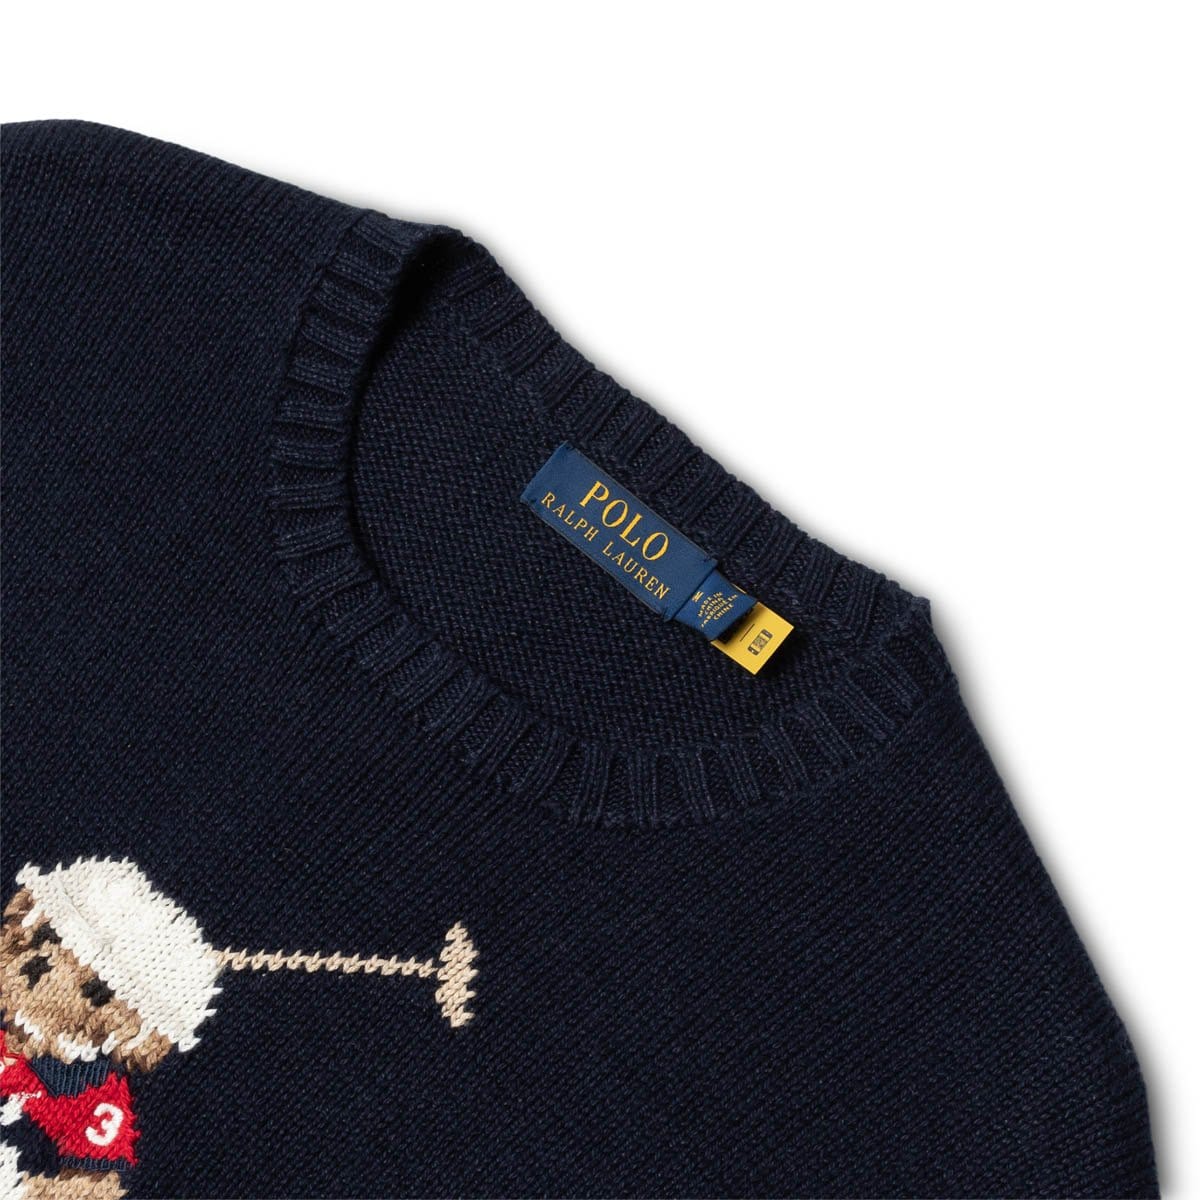 Polo Ralph Lauren Knitwear POLO BEAR & BIG PONY SWEATER